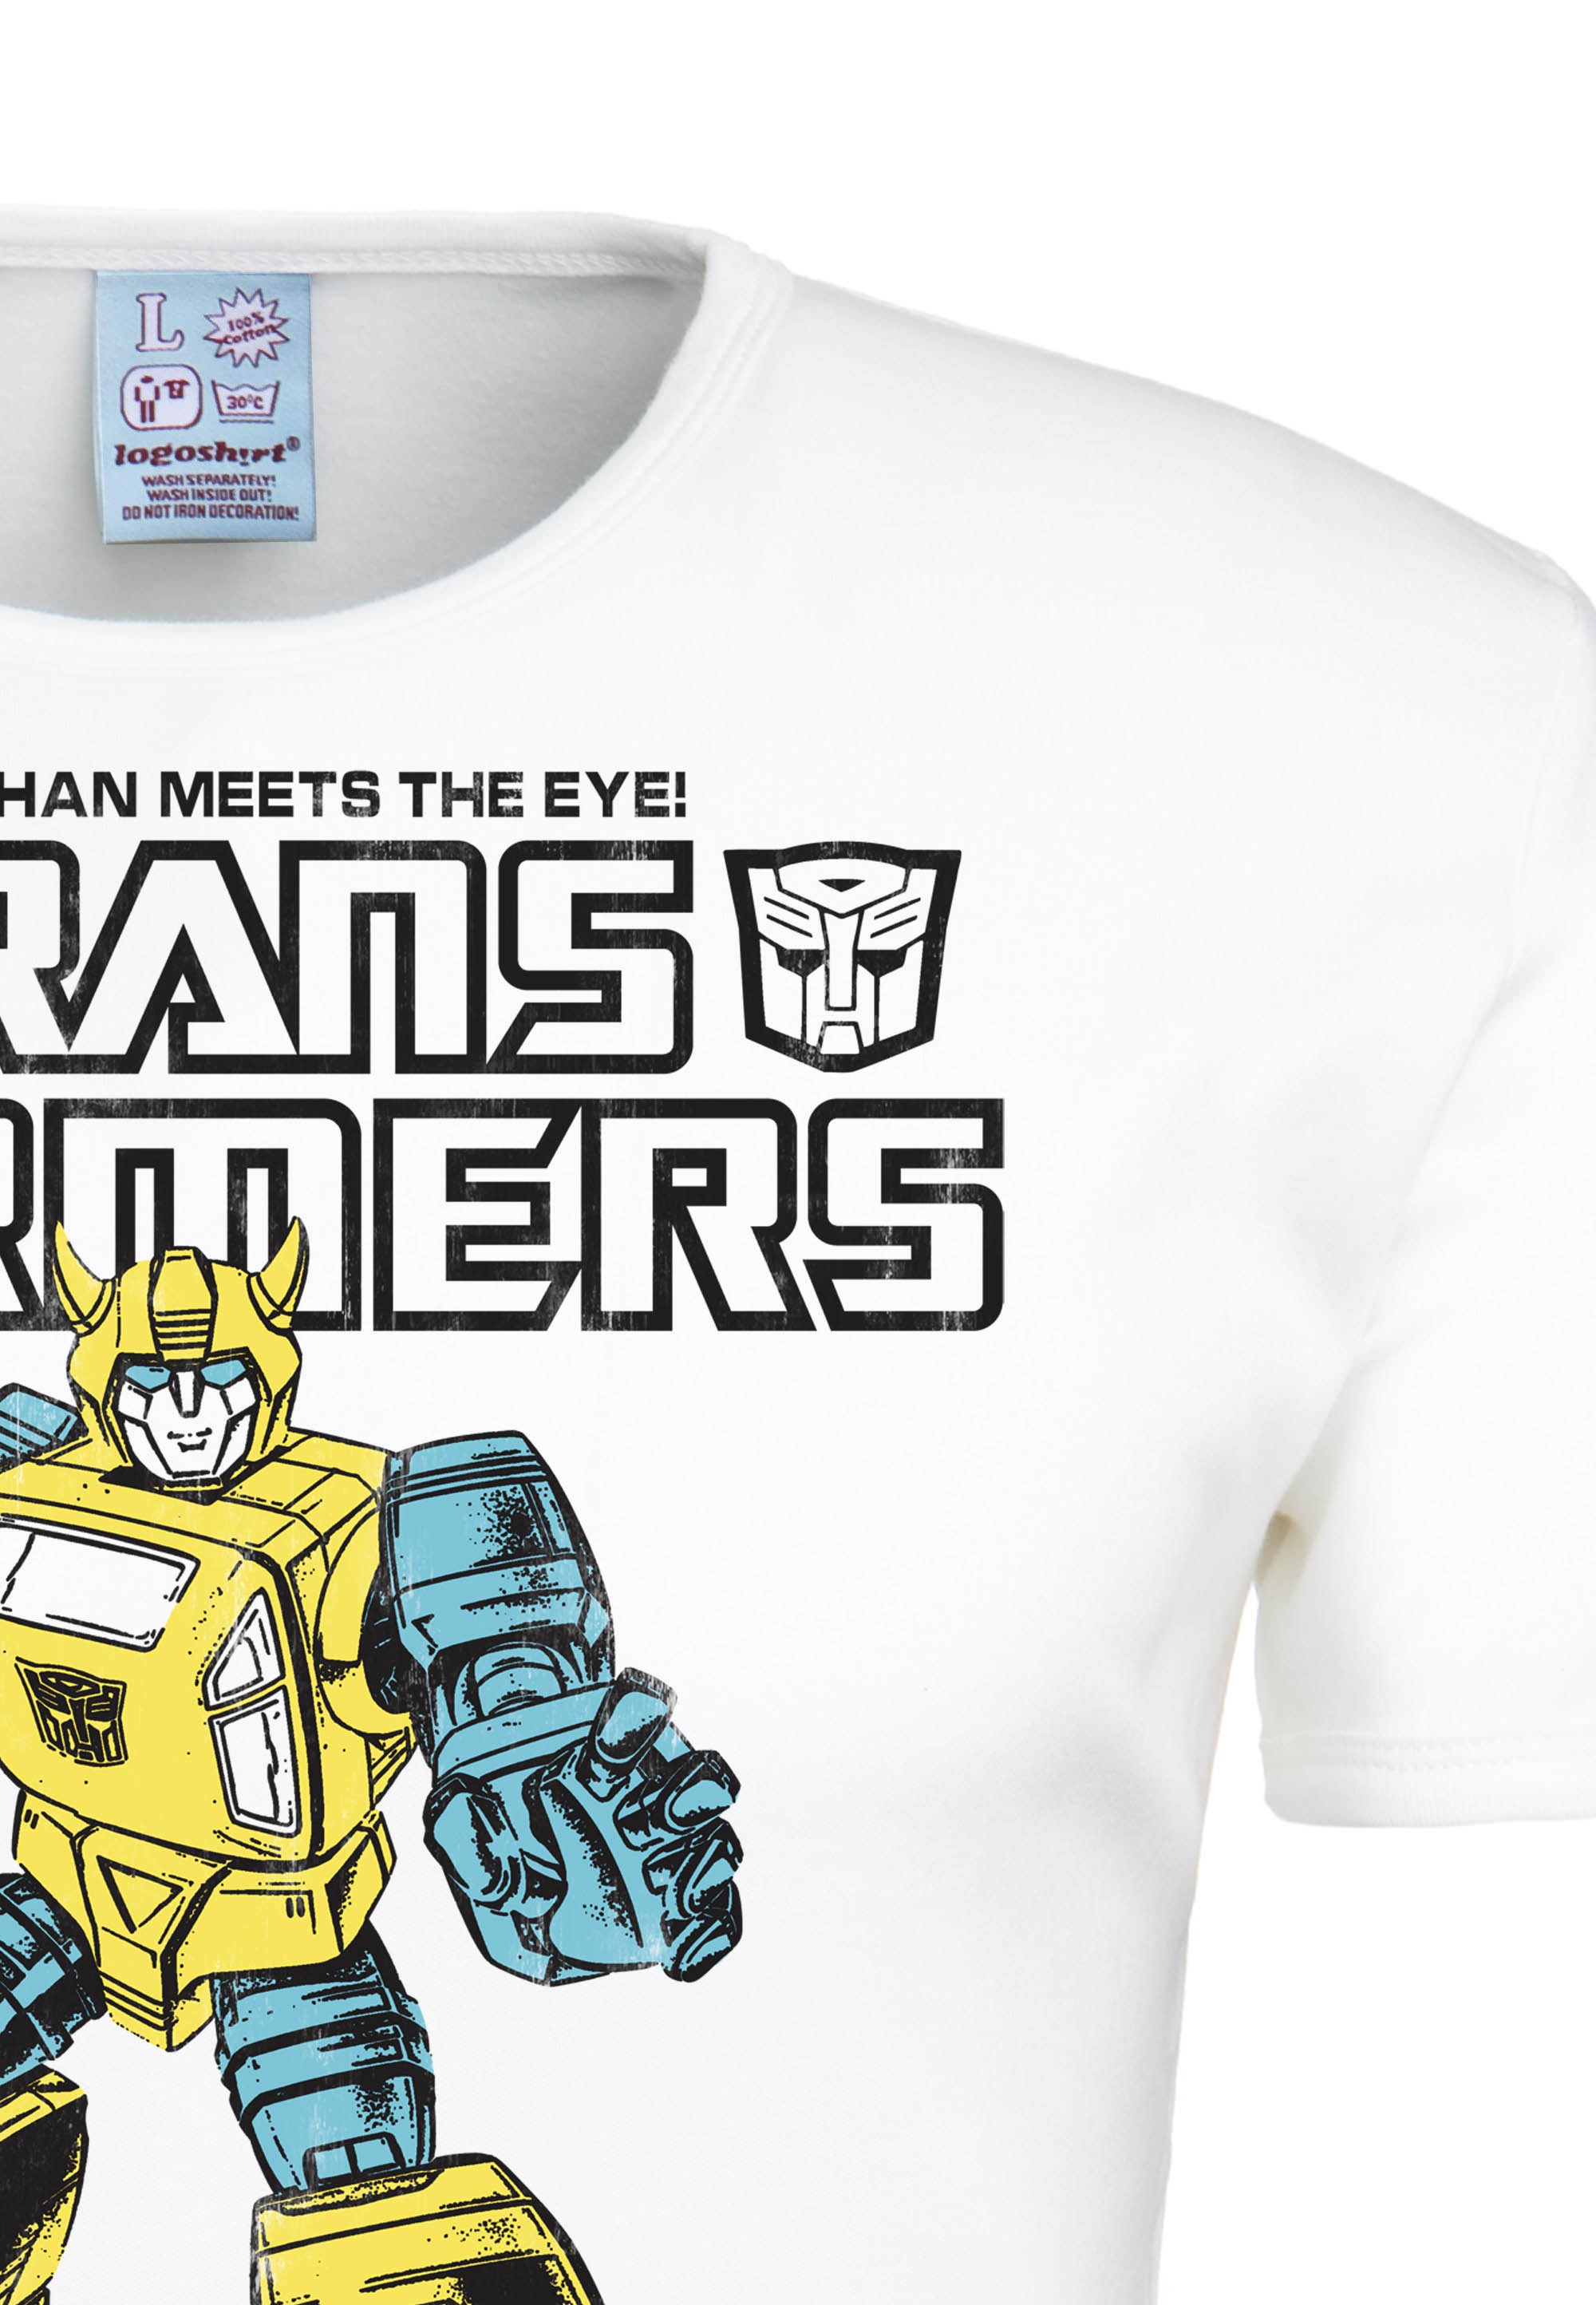 LOGOSHIRT T-Shirt »Bumblebee - Autobots«, mit lizenzierten Originaldesign